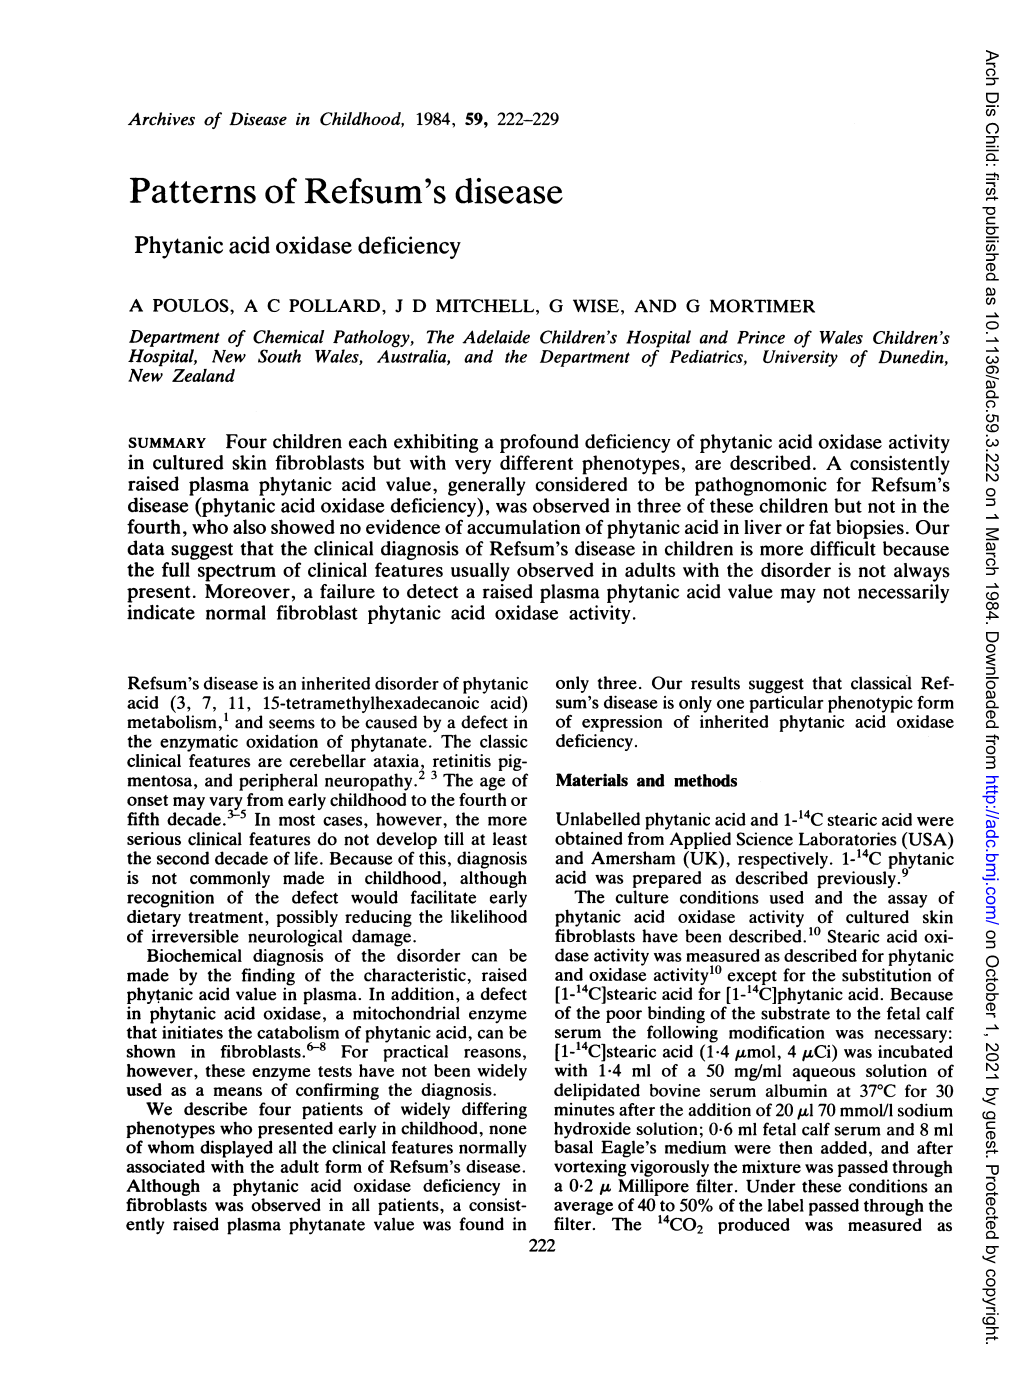 Patterns of Refsum's Disease Phytanic Acid Oxidase Deficiency